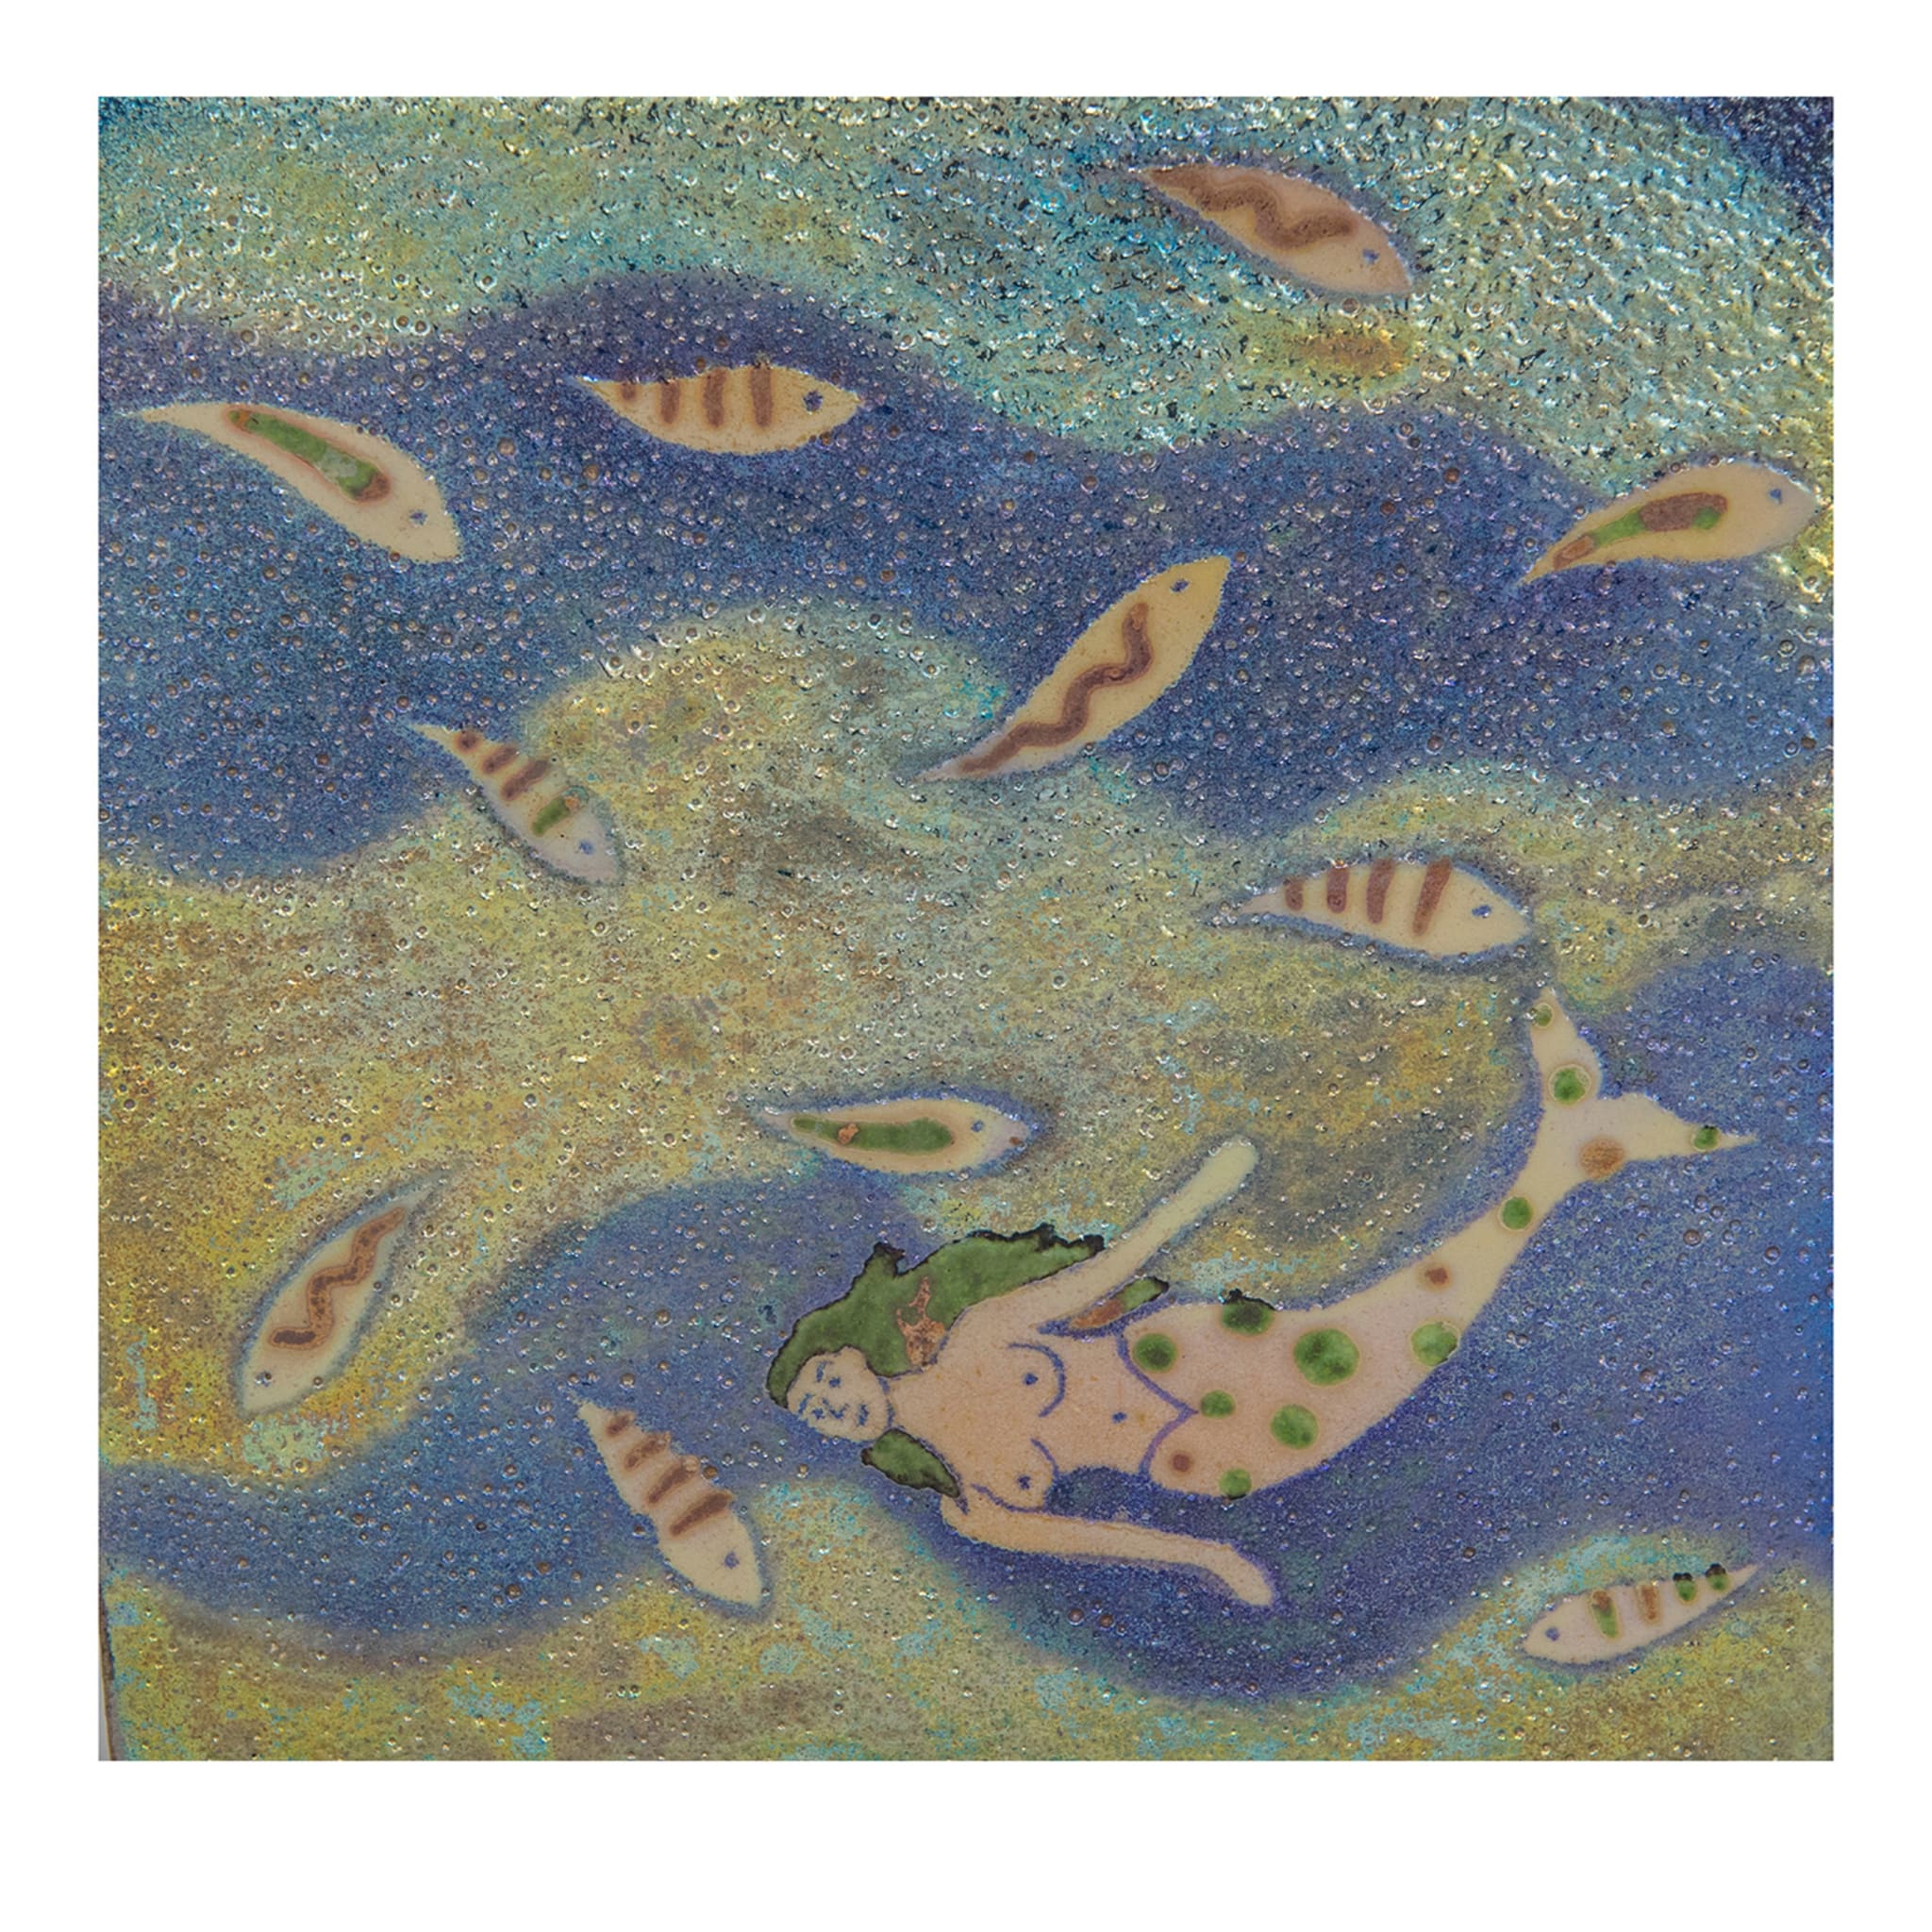 Mermaid Among Fish Silver Lustre Tile #1 - Main view